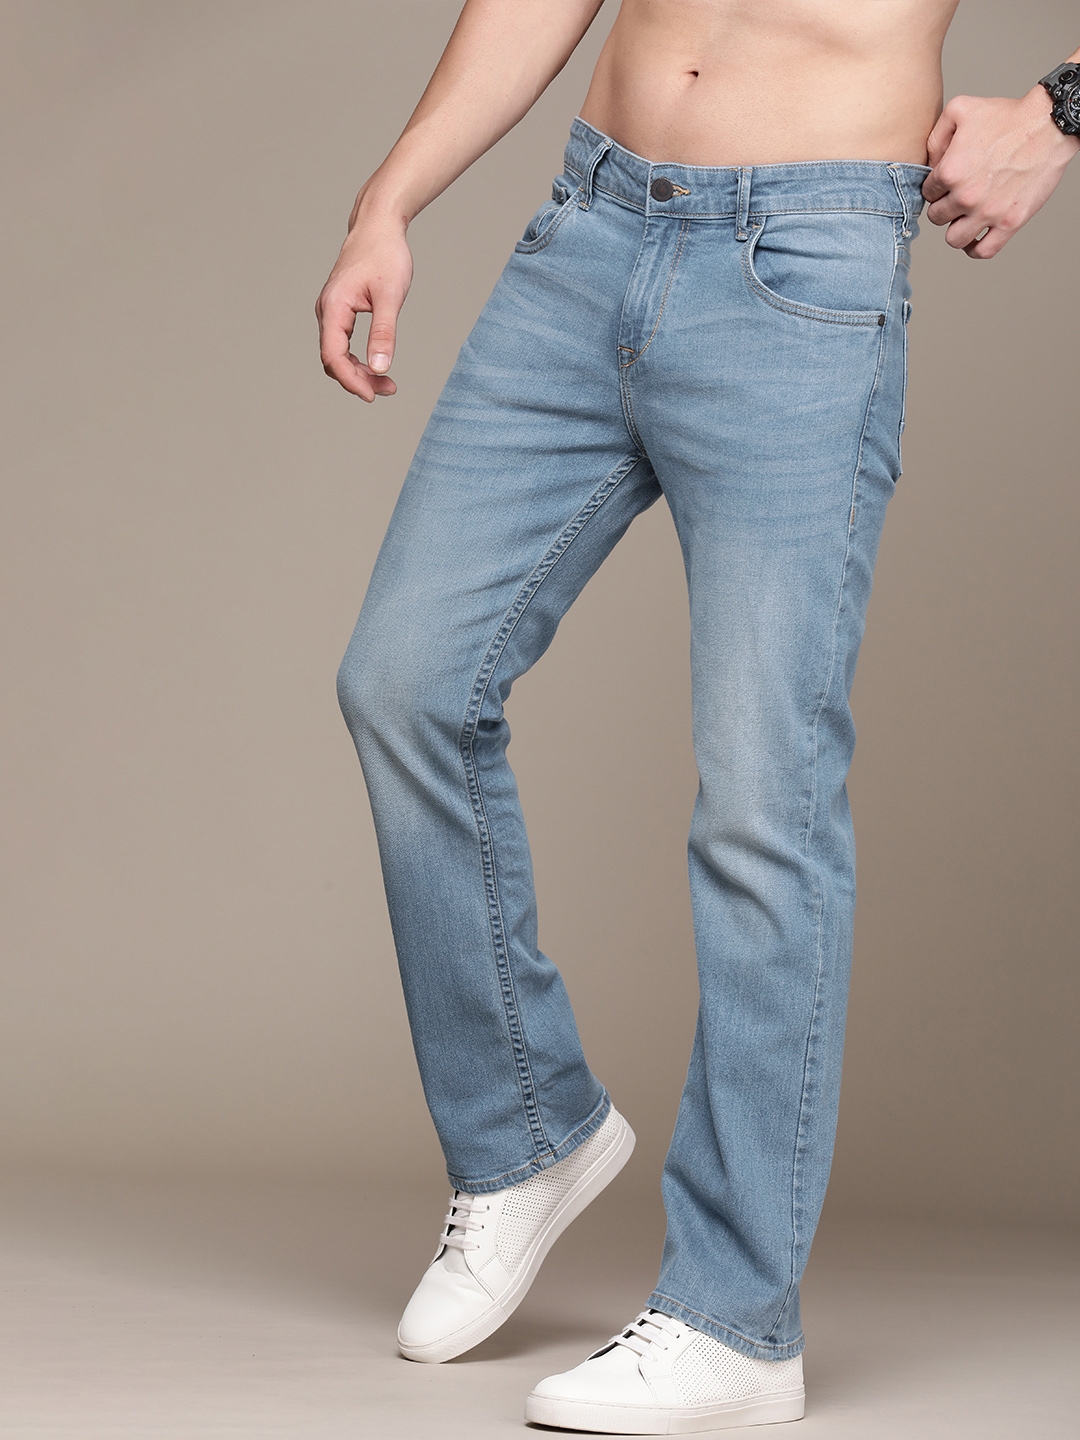 Display more than 124 bootcut jeans men super hot